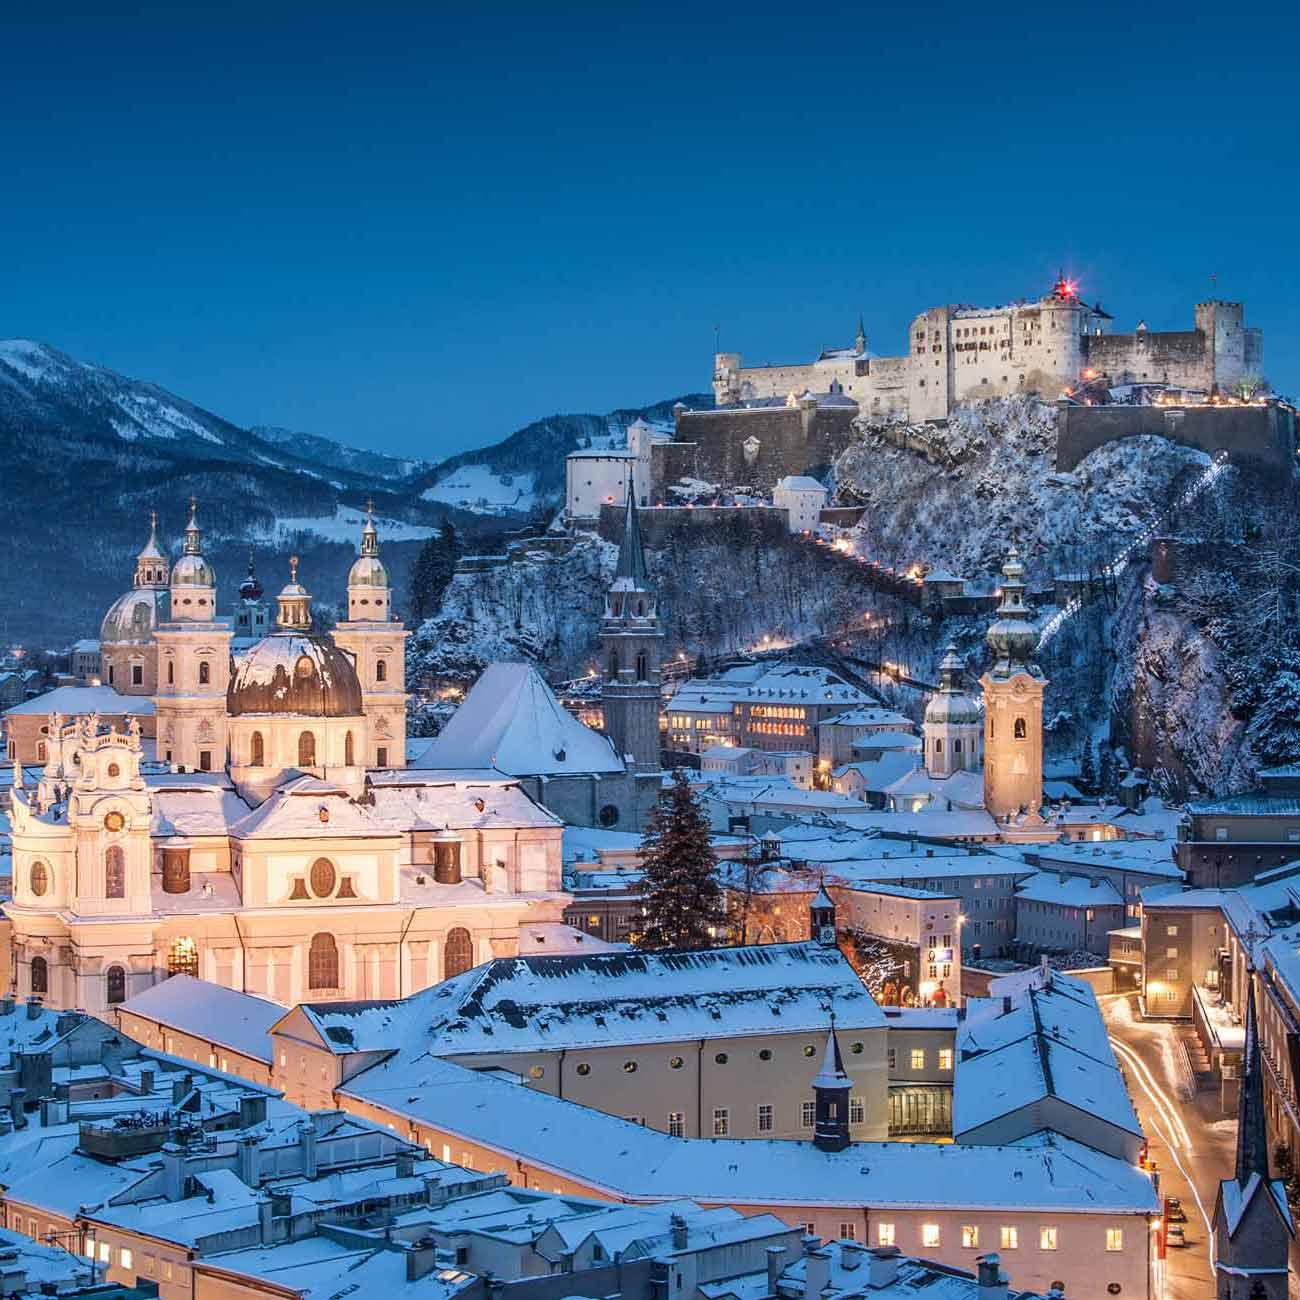 Christmas Markets of Austria, Germany and Switzerland